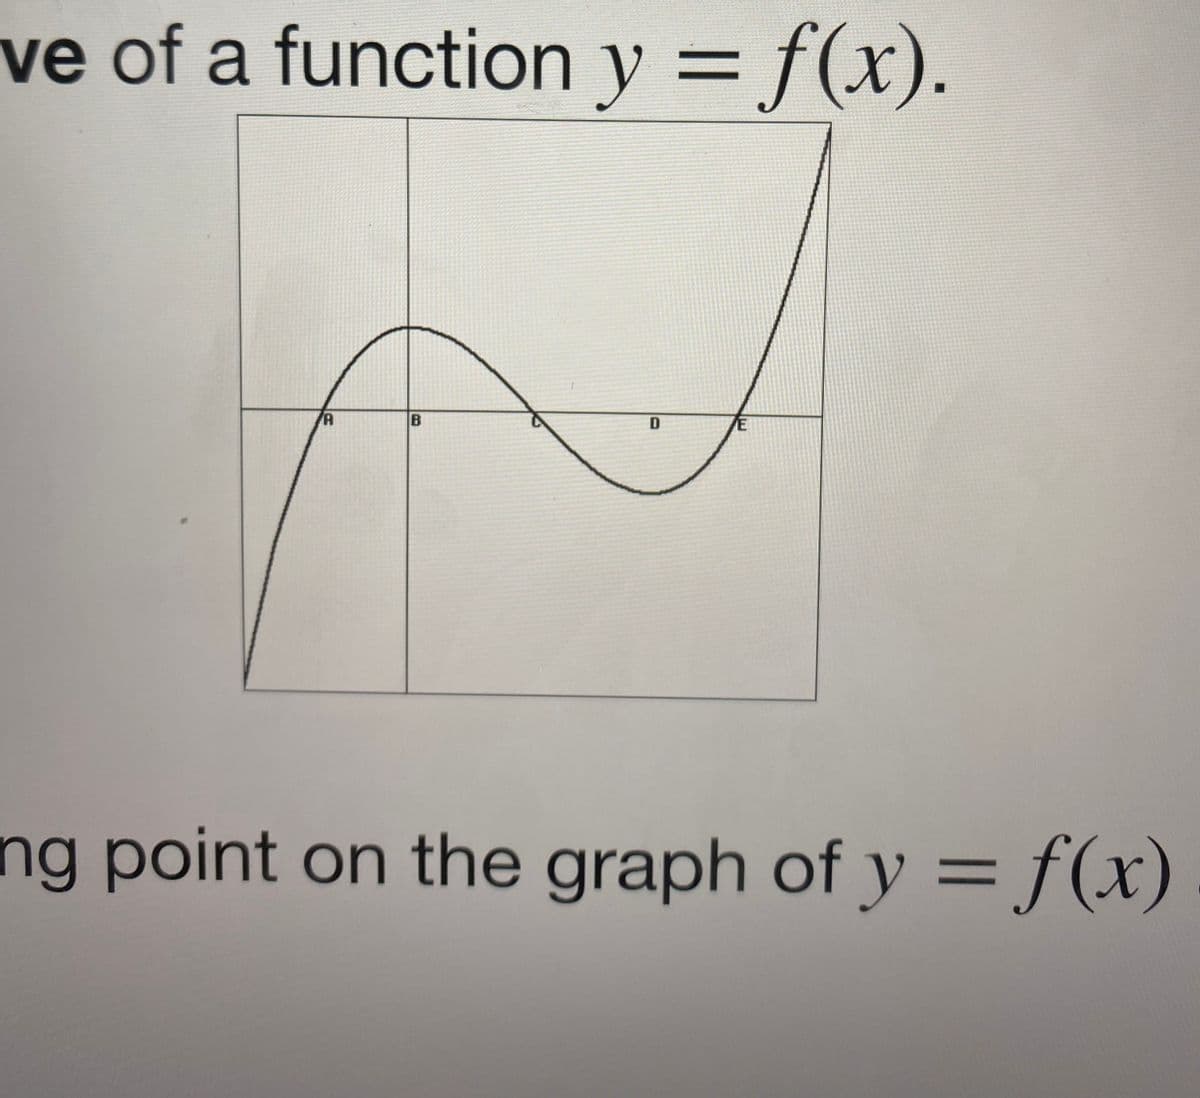 ve of a function y = f(x).
A
B
D
E
ng point on the graph of y = f(x)